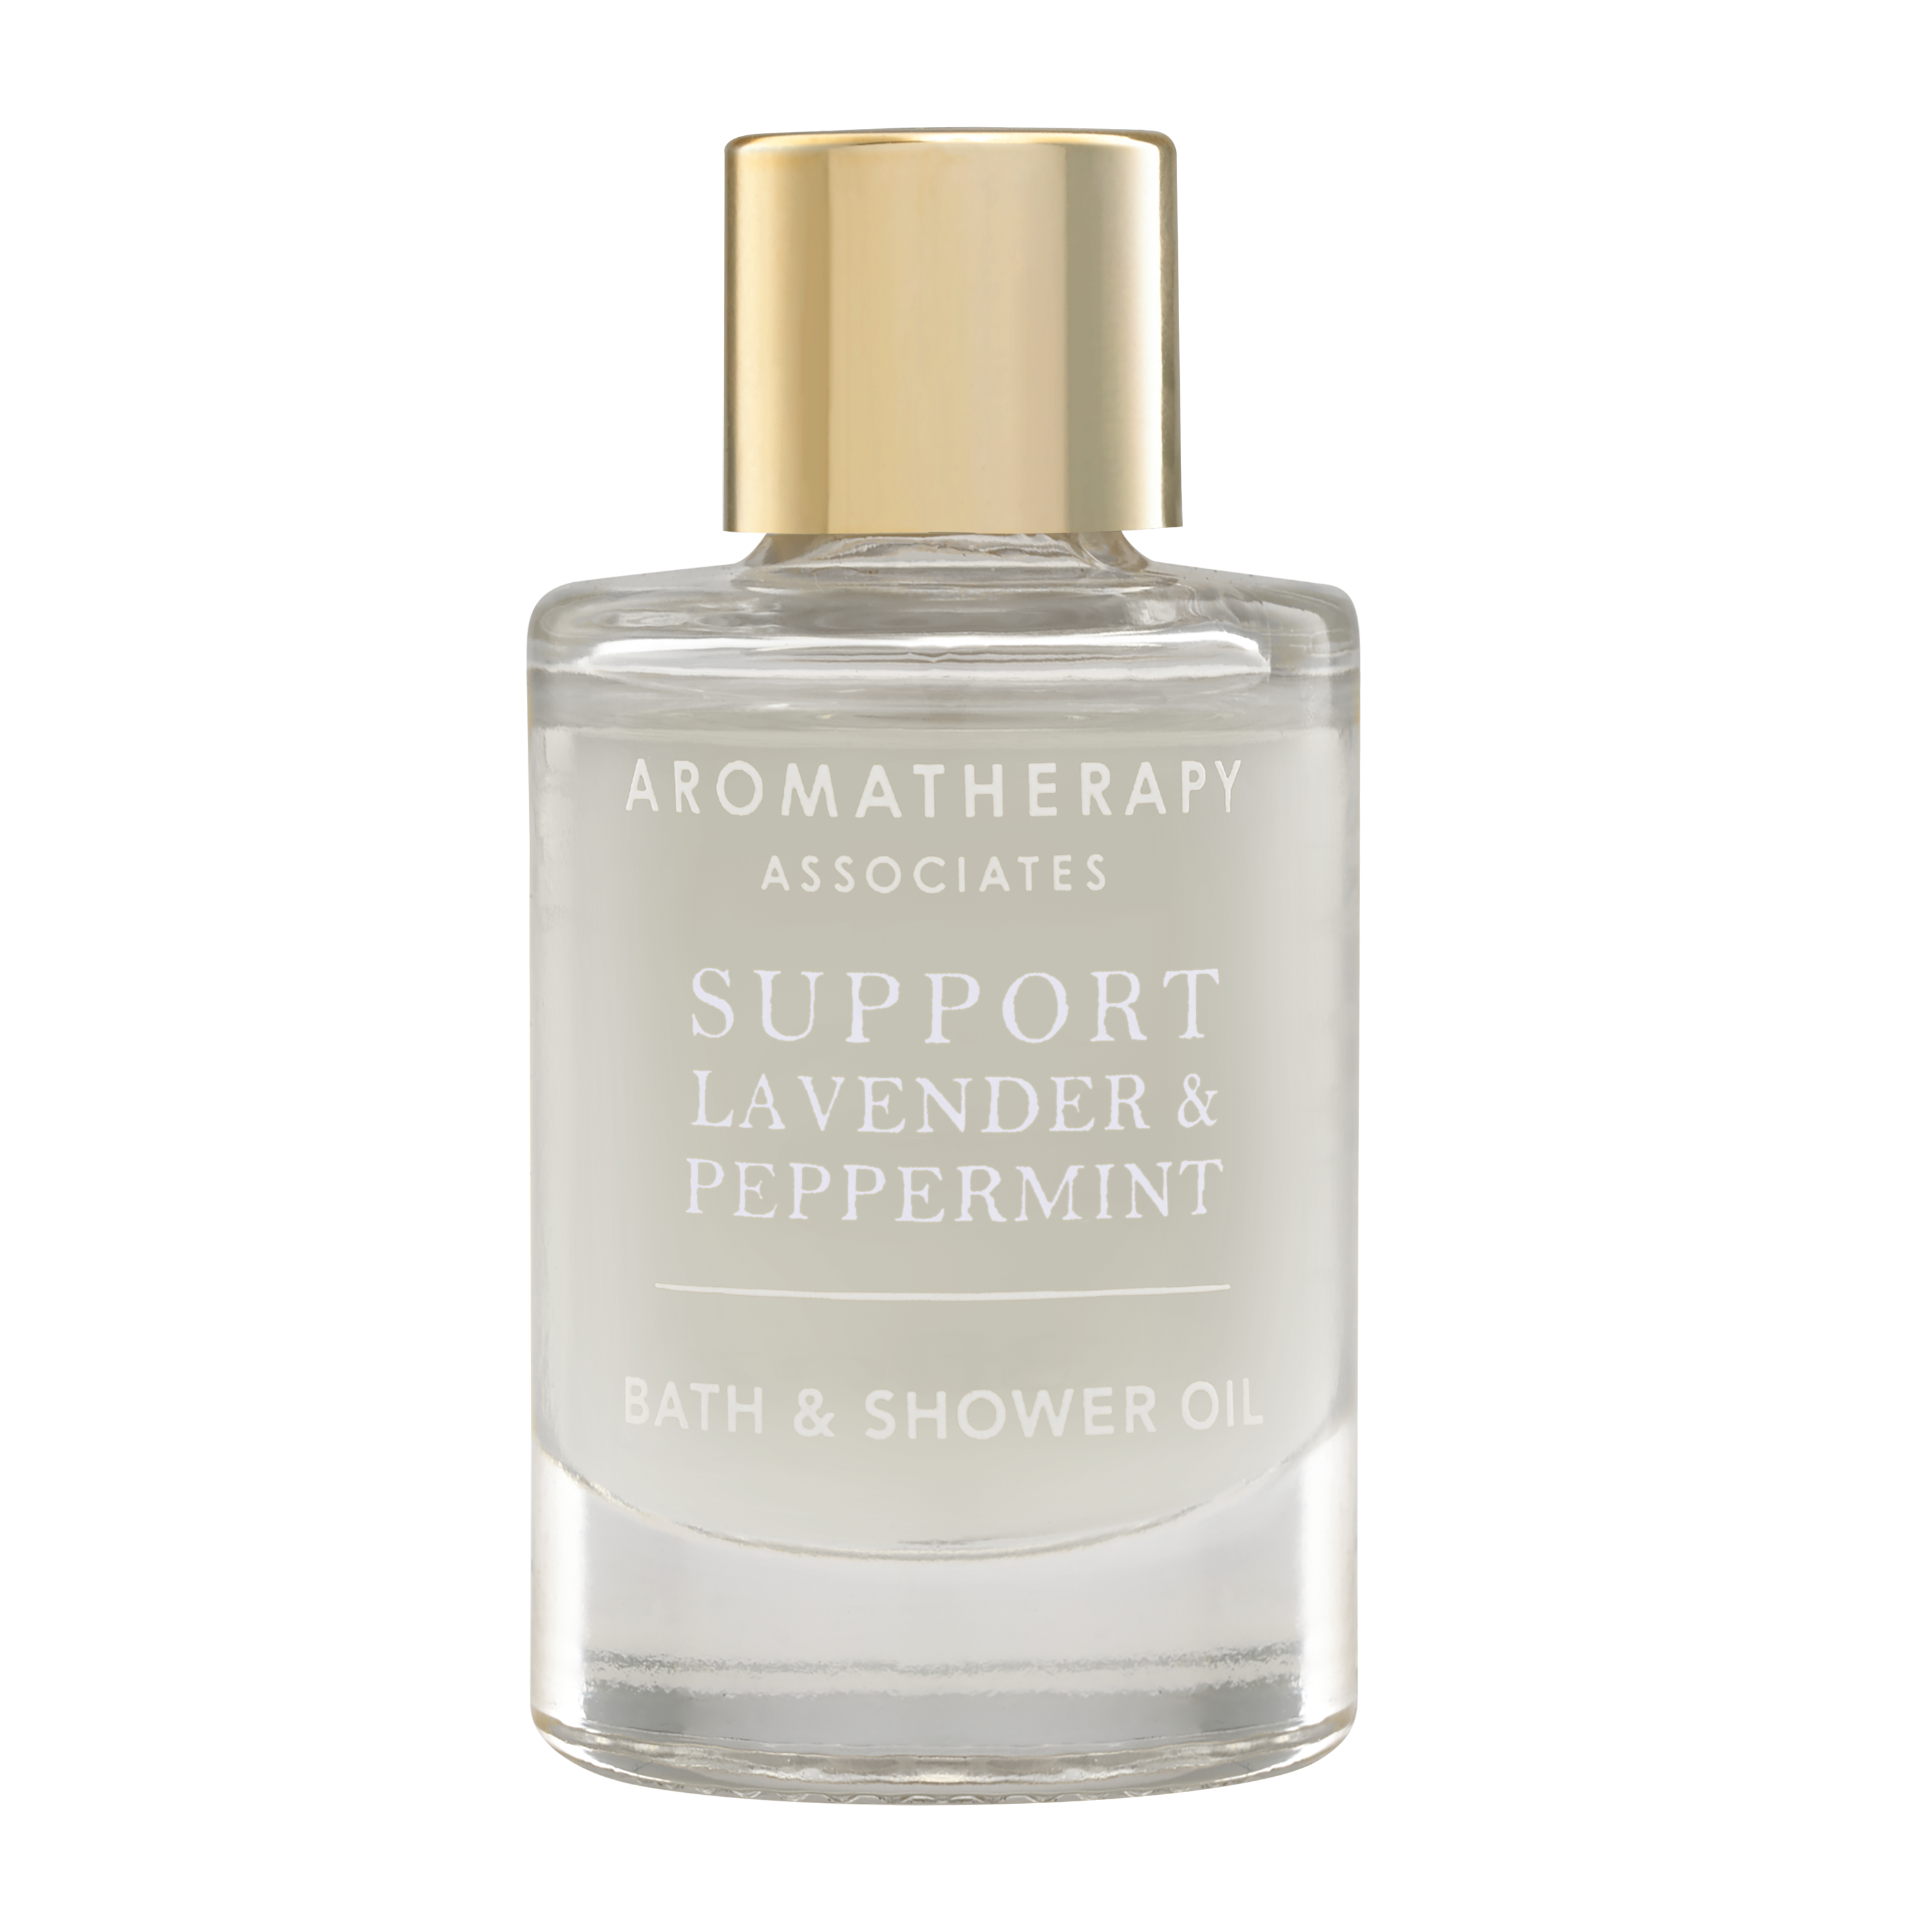 Support Lavender & Peppermint Bath & Shower Oil 9ml Aromatherapy Associates